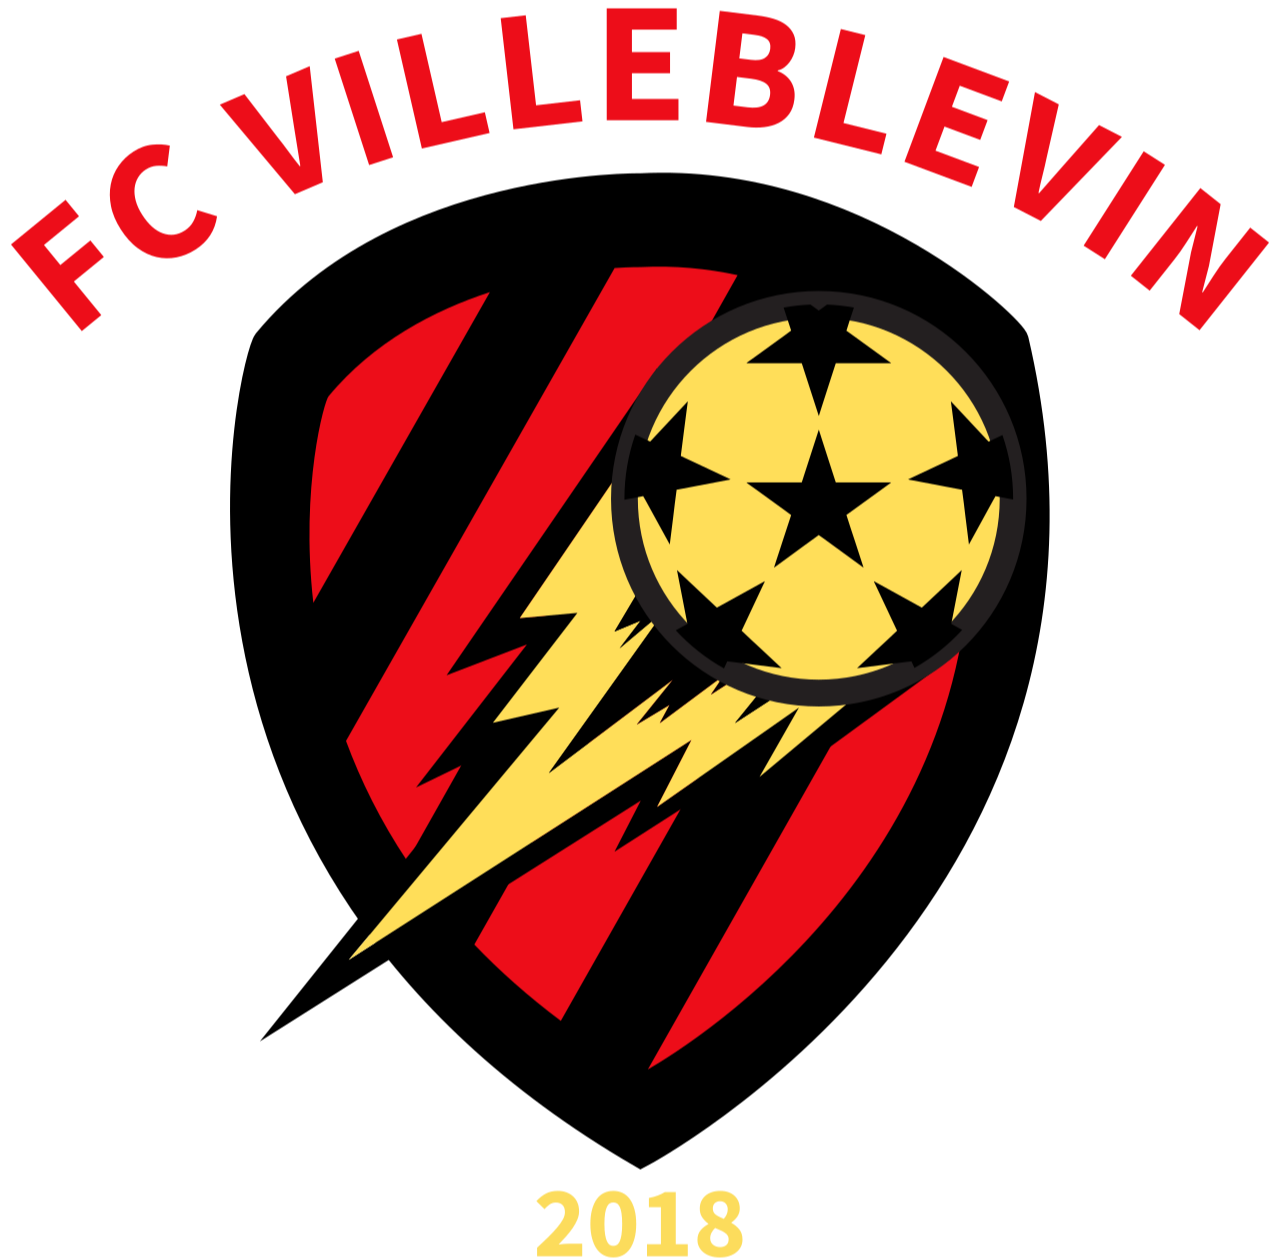 FC Villeblevin's logo